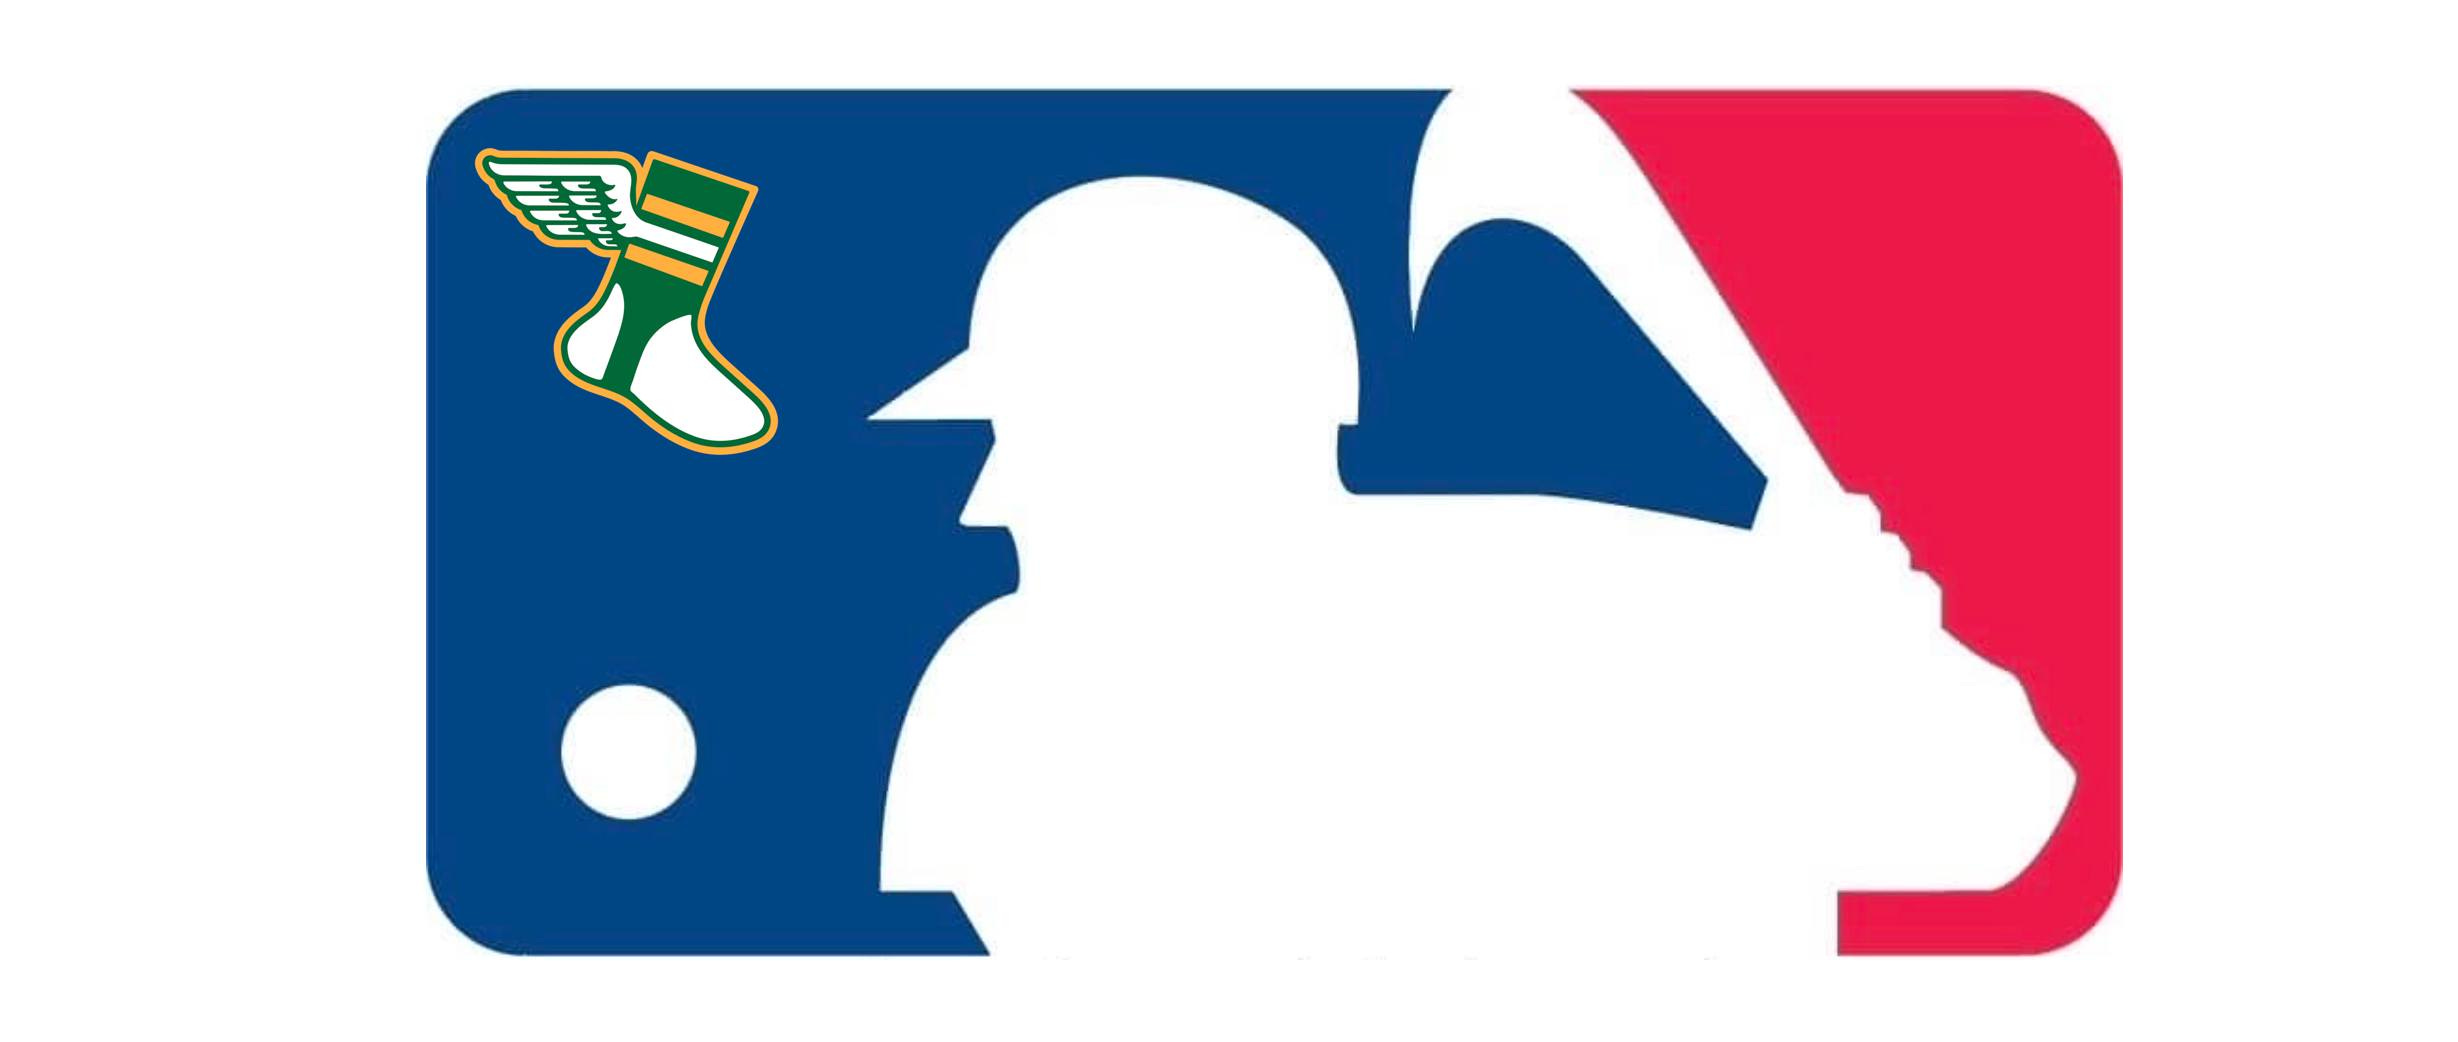 MLBshop.com - Celebrate 20 years of playing Major League